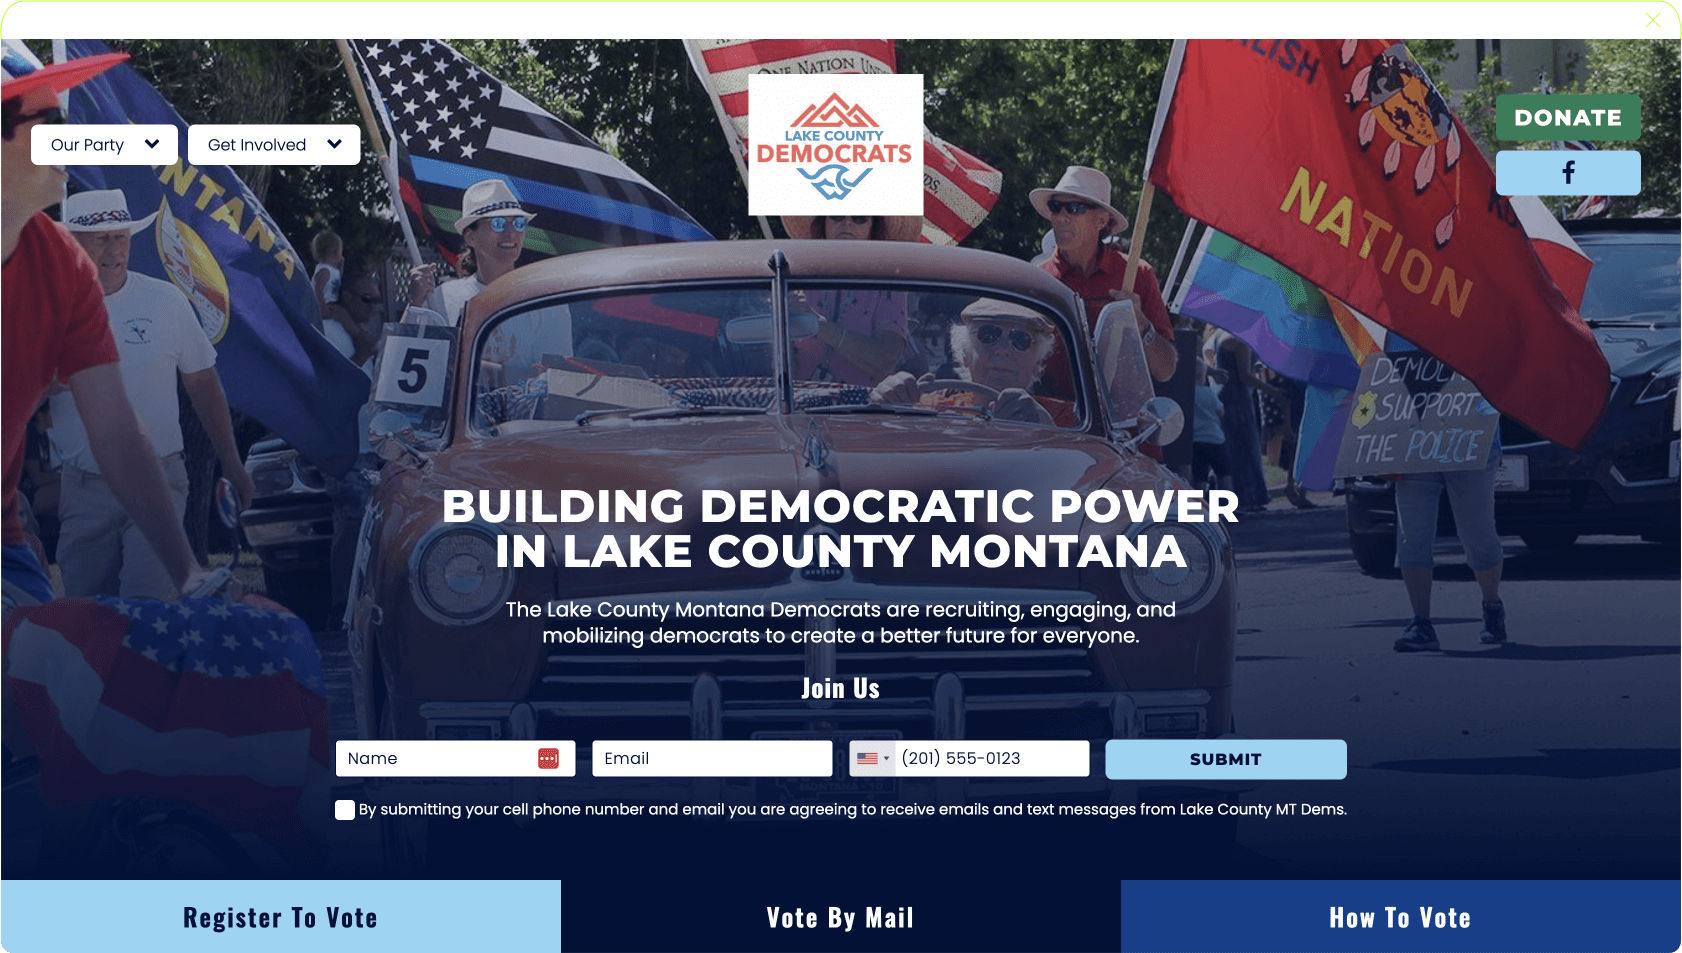 Mt. Lake County Democrats' website screenshot